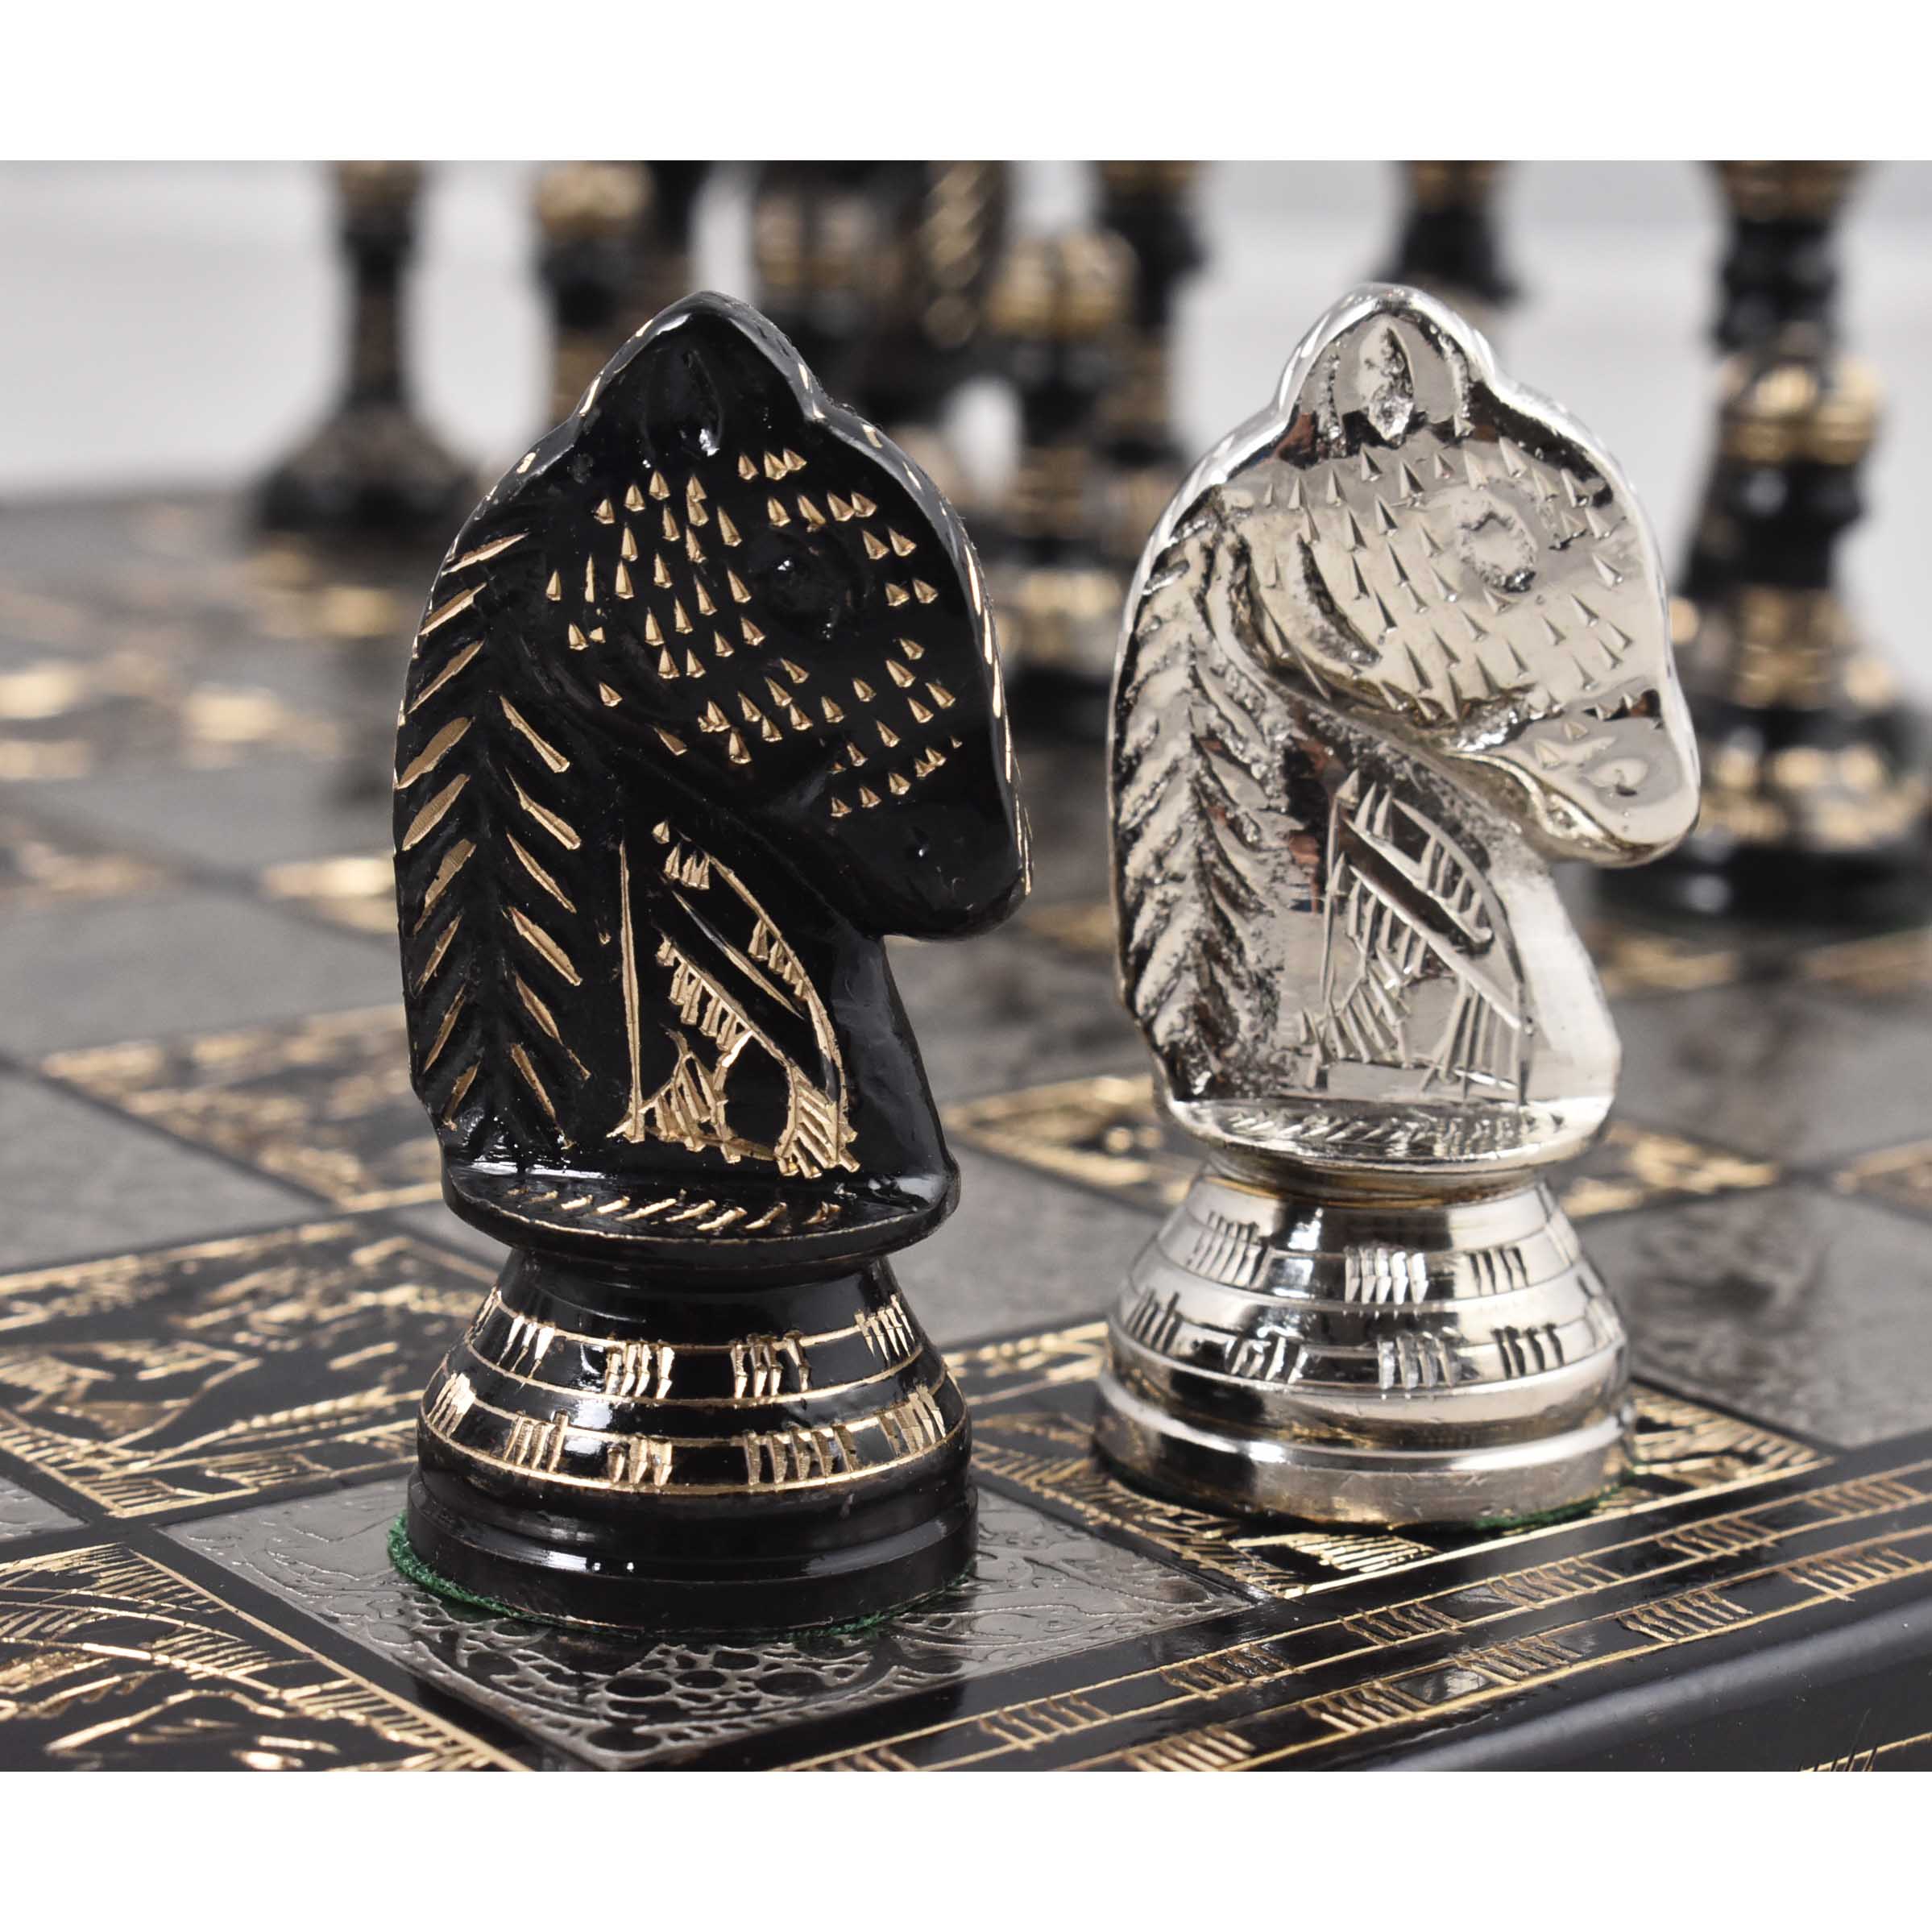 Staunton Inspired Brass Metal Luxury Chess Pieces & Board Set